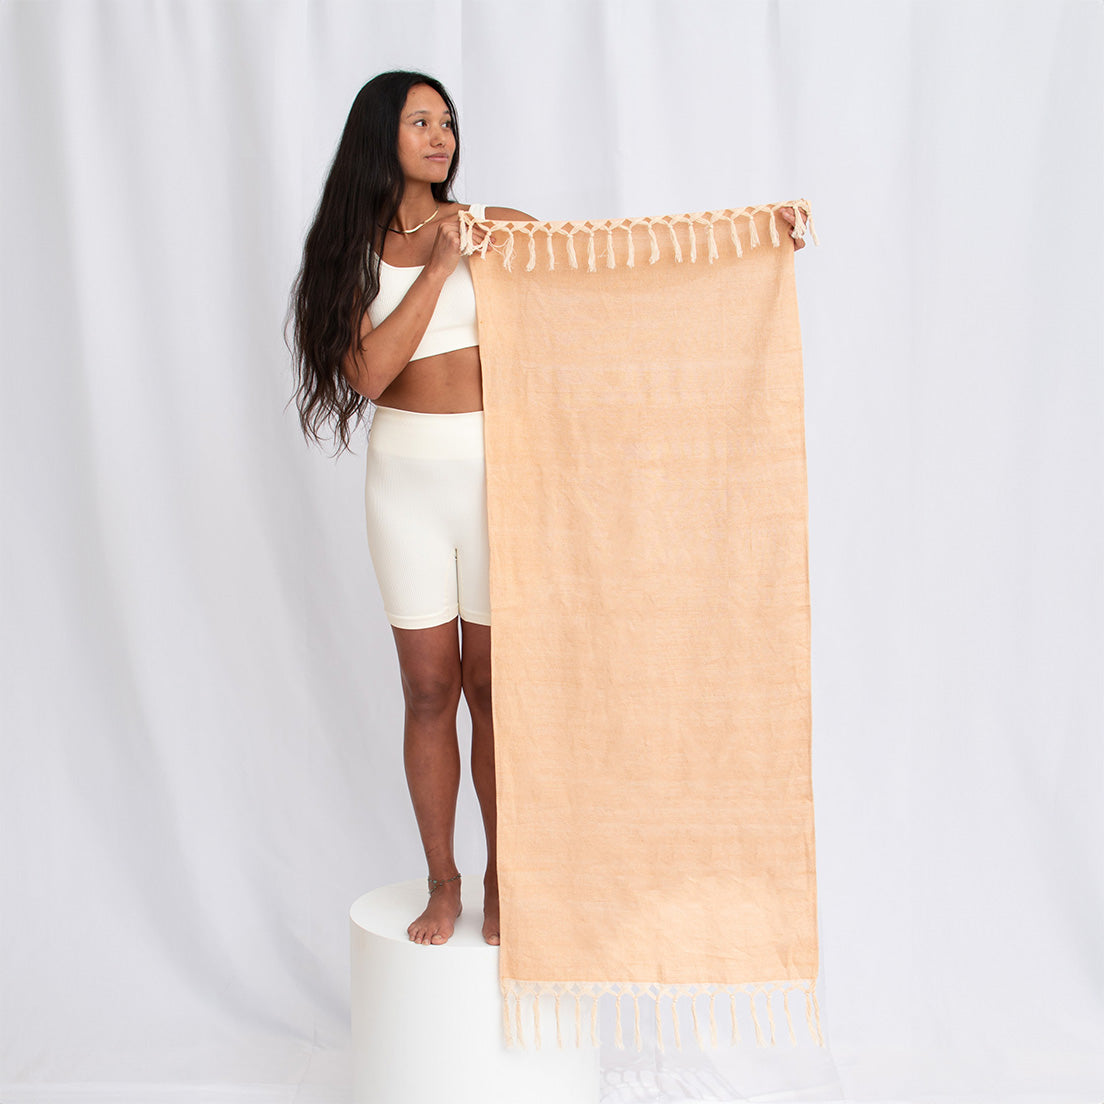 Oko Living Sunstone Naturally Dyed Herbal Yoga Towel